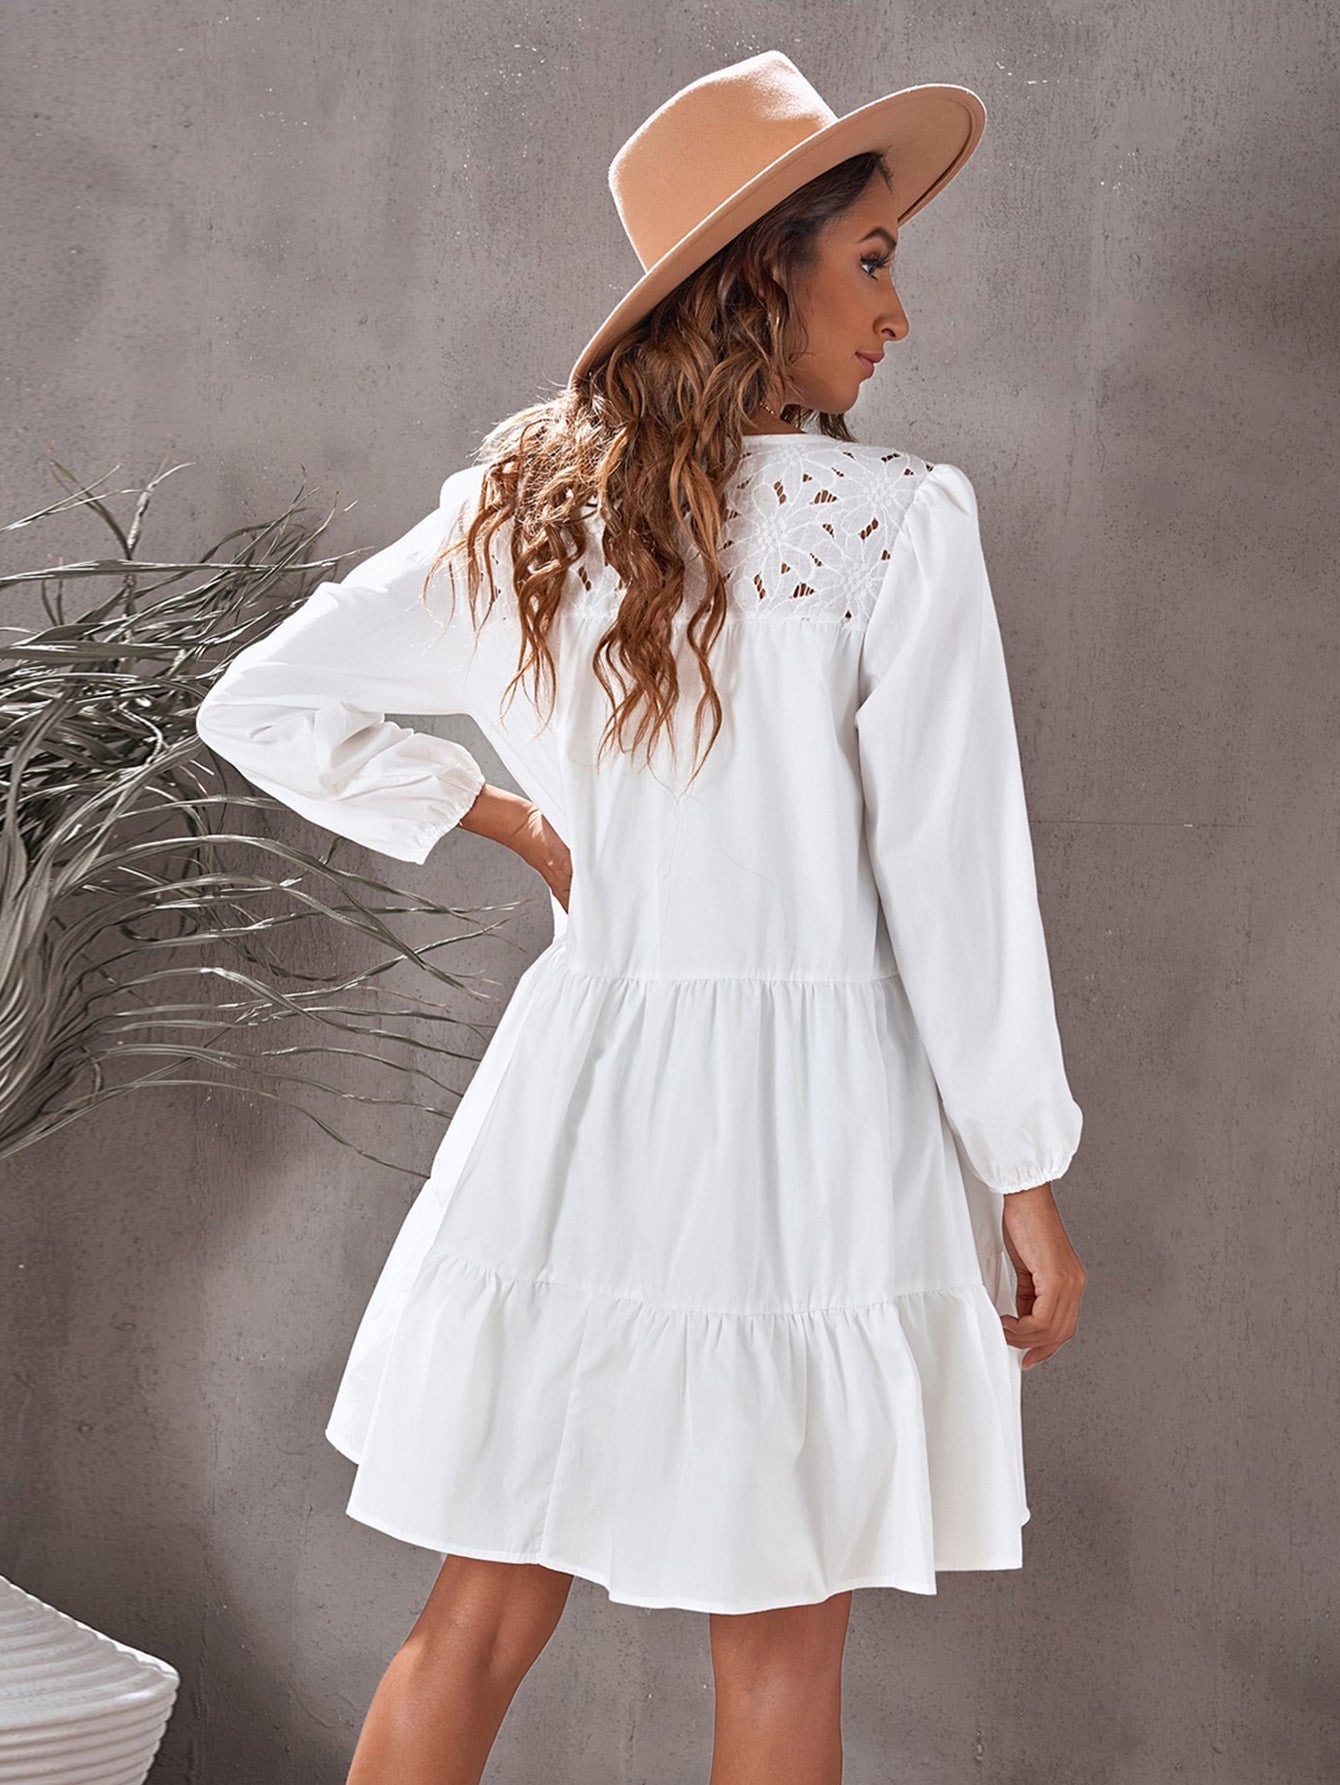 white Lace Yoke Mini Dress with 3/4 Bubble Sleeves Sai Feel